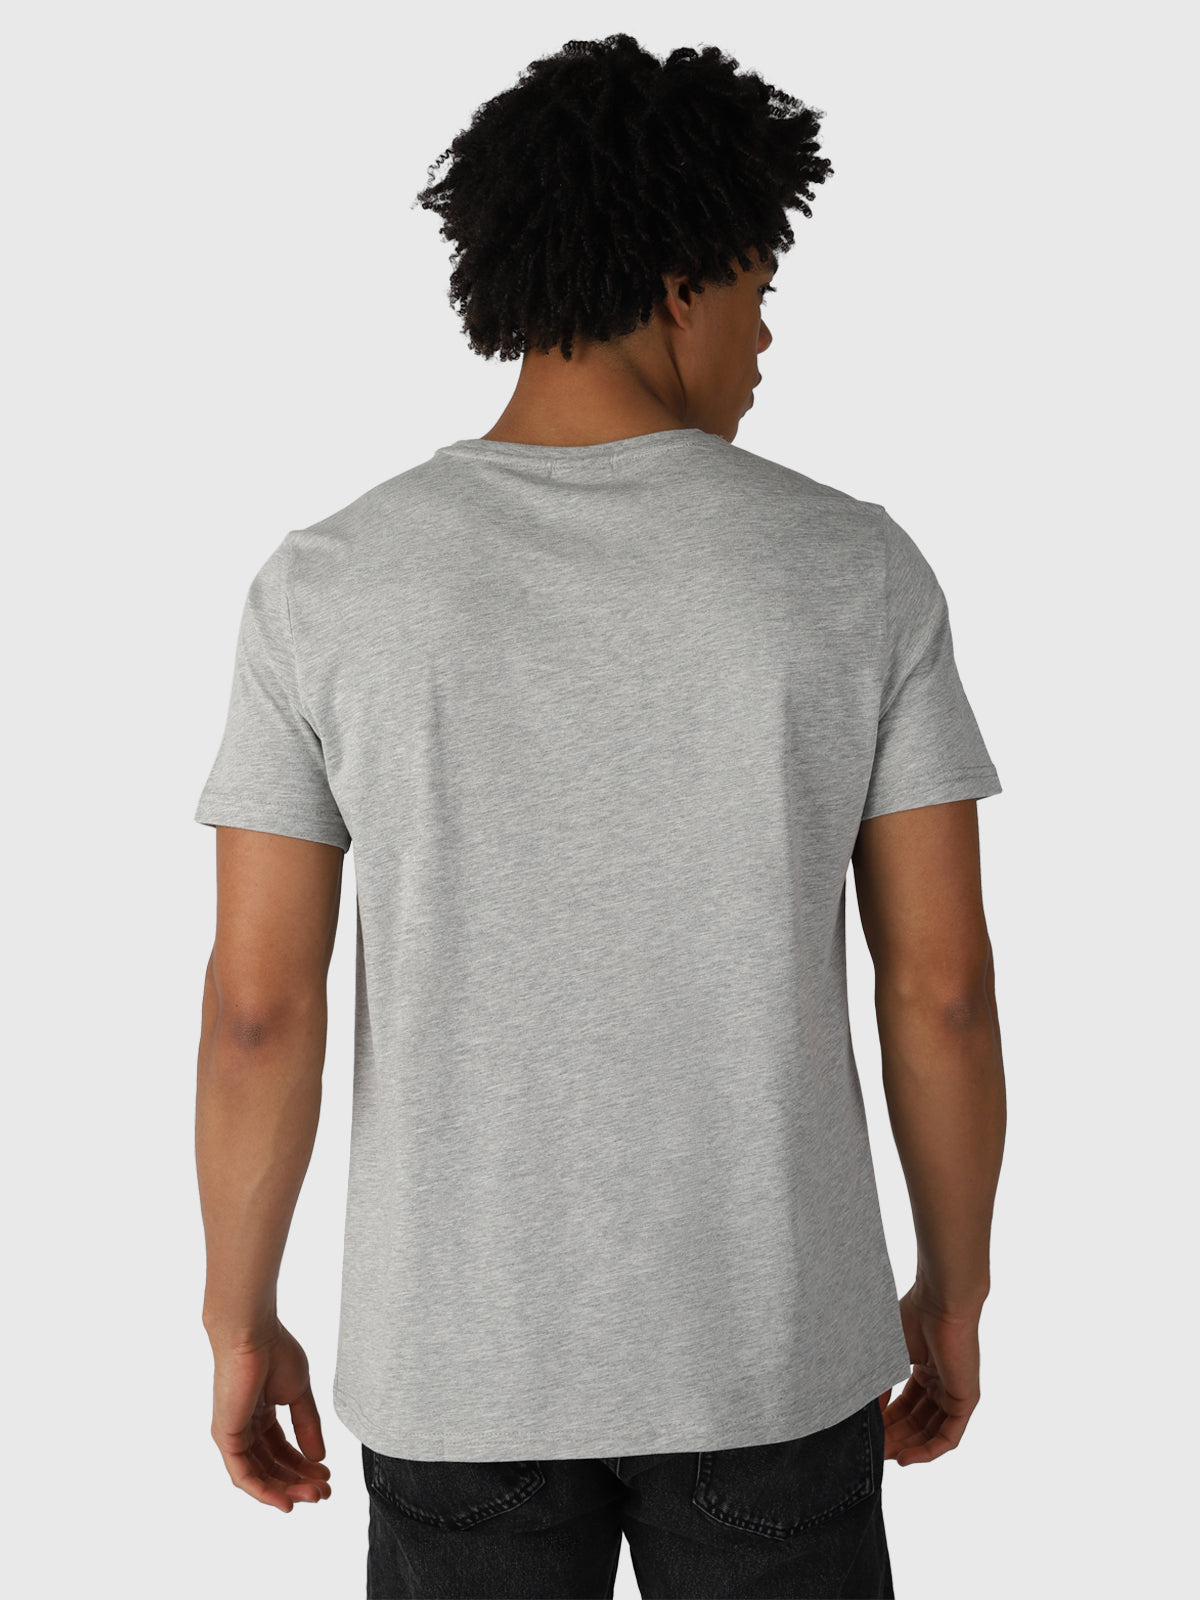 Alesso-R Herren T-Shirt | Grau